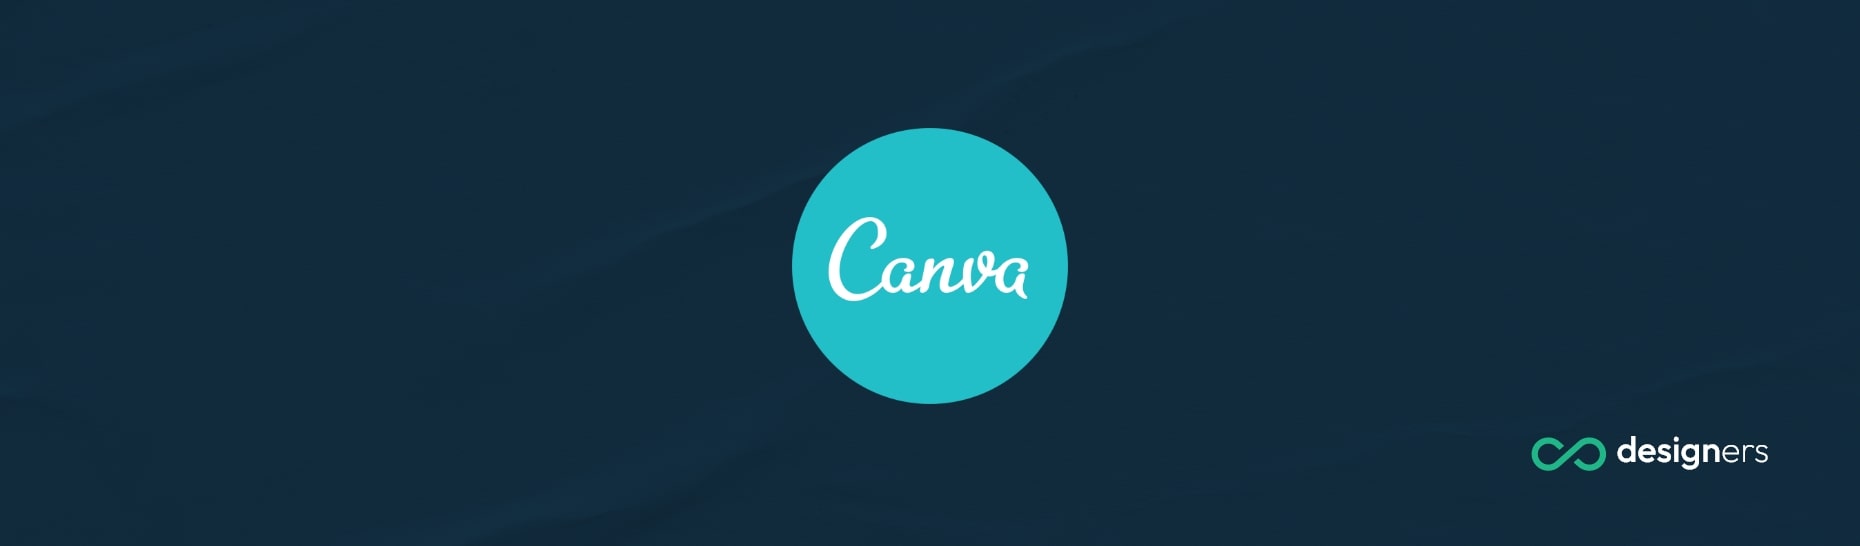 Is Canva a SaaS?